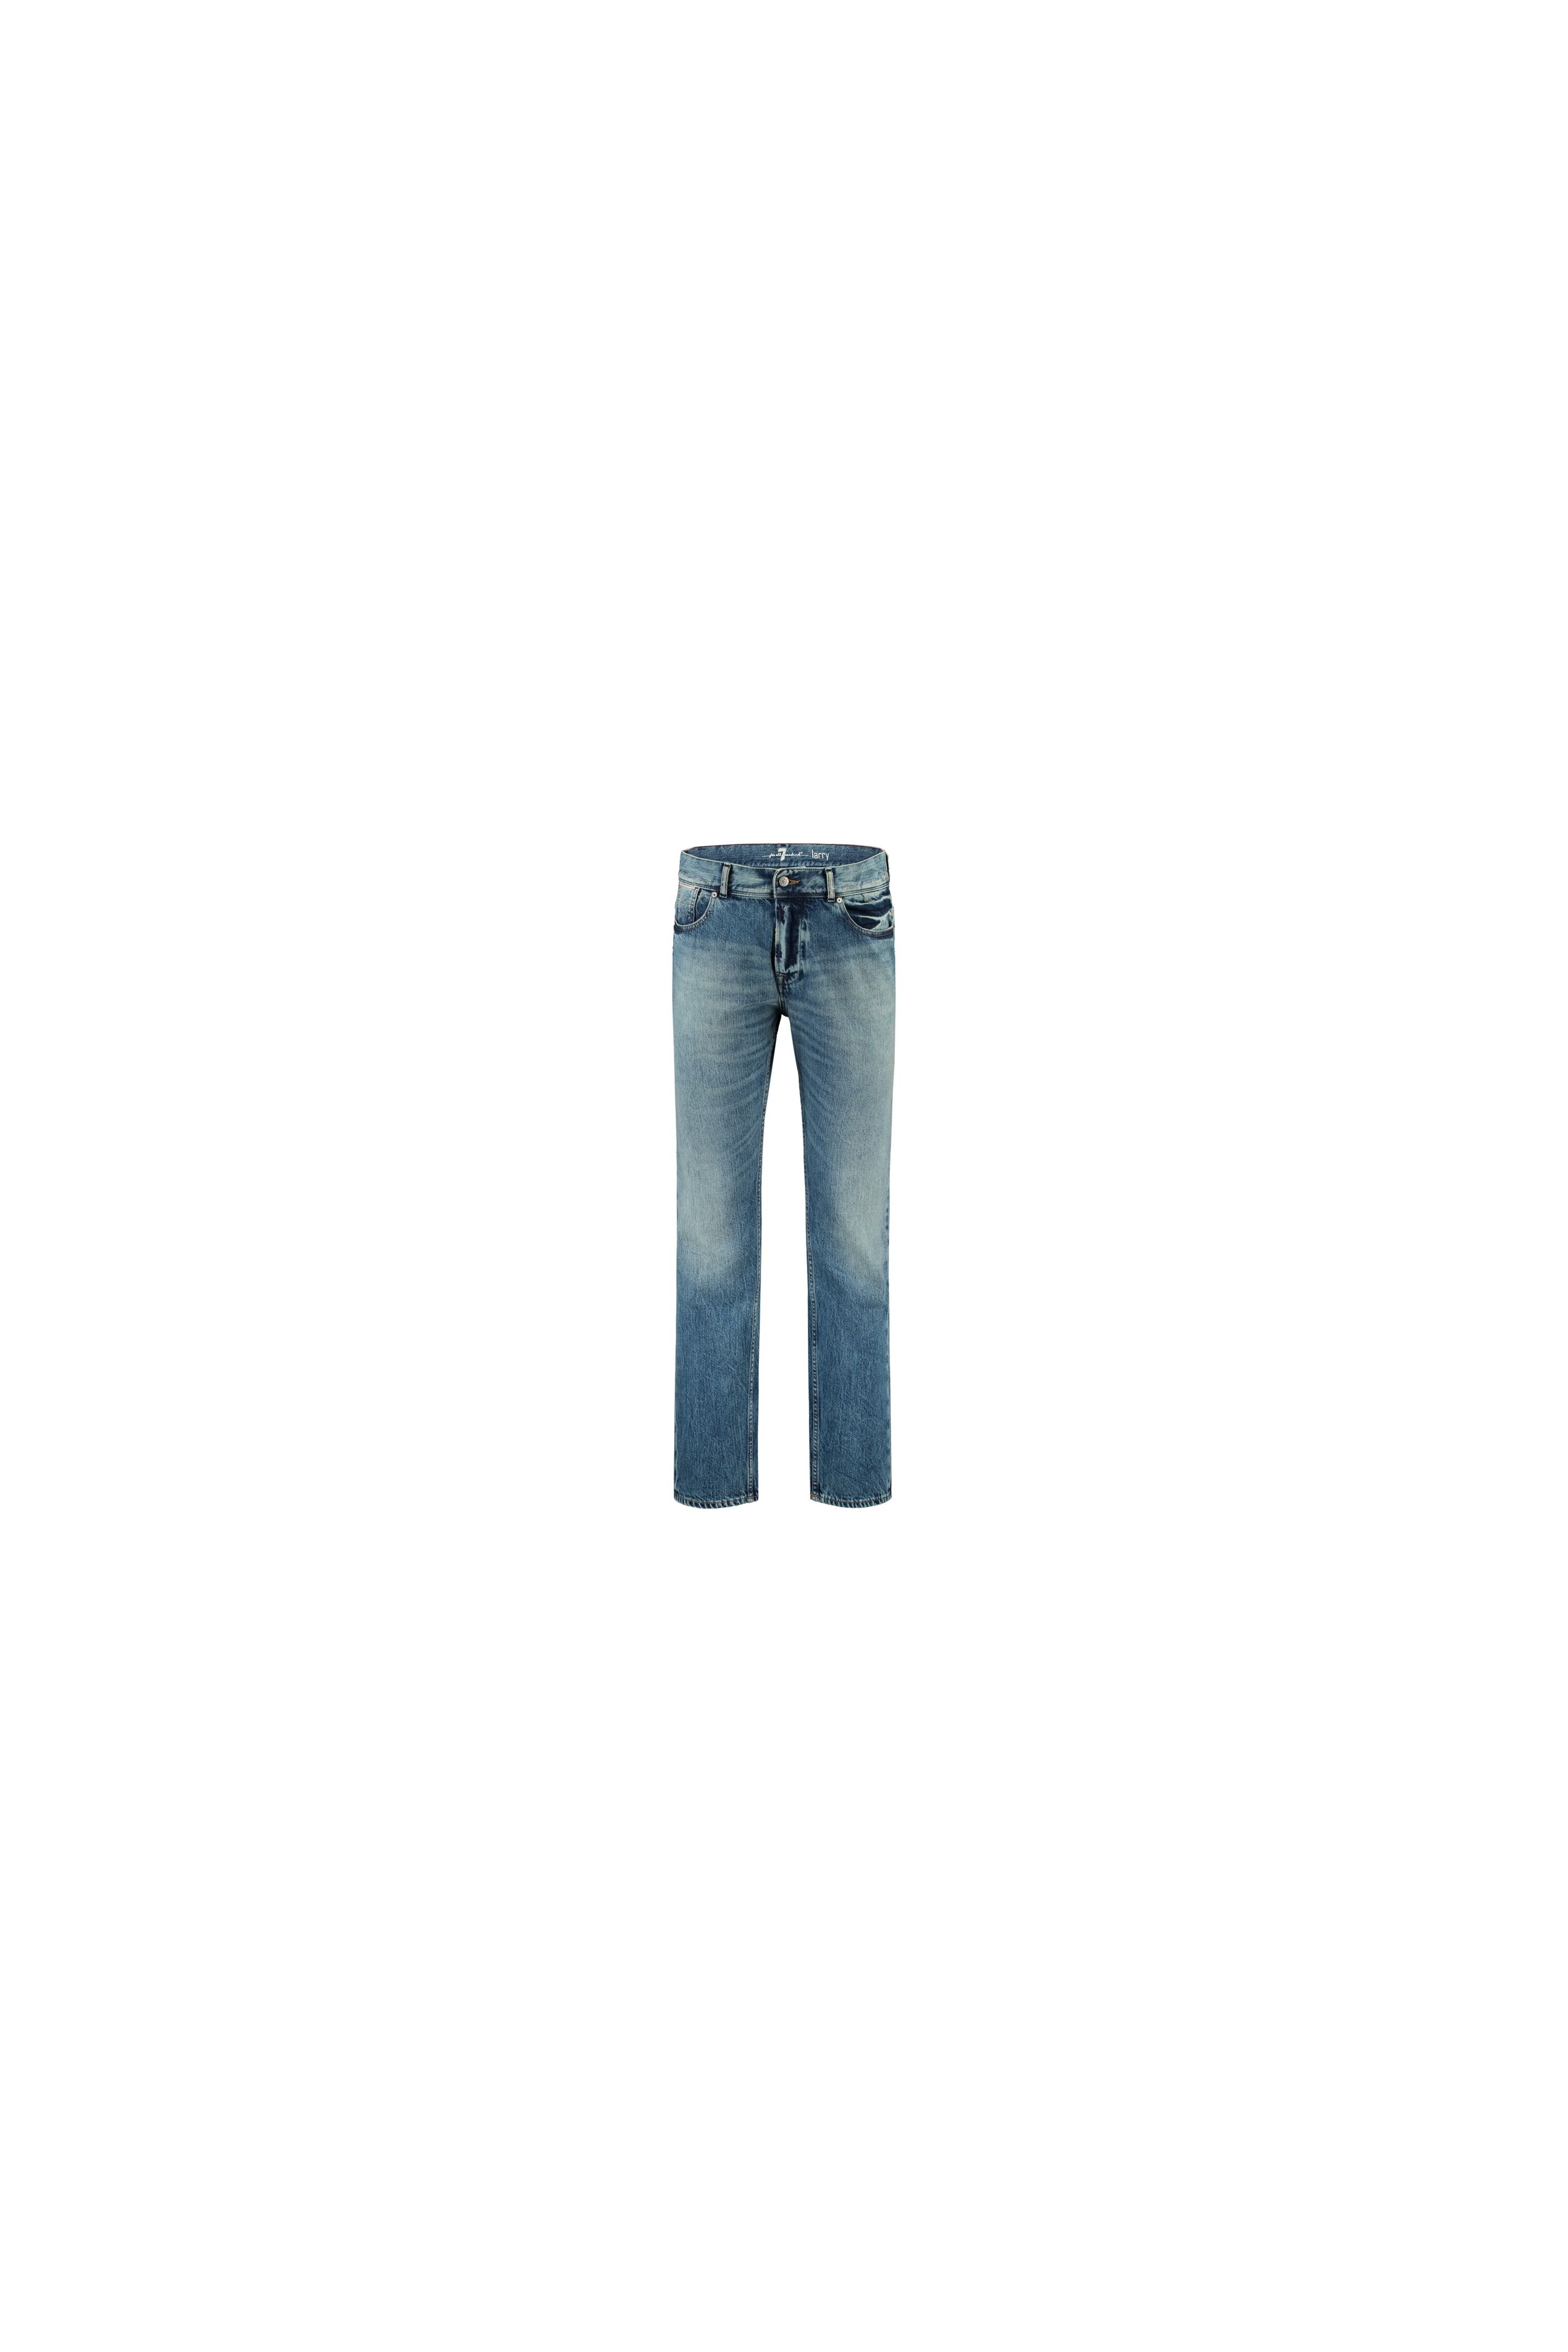 klink beha joggen 7 For All Mankind Larry Slim Tapered Jeans in Selvedge Light Blue -  SKAR410RV | Bloom Fashion